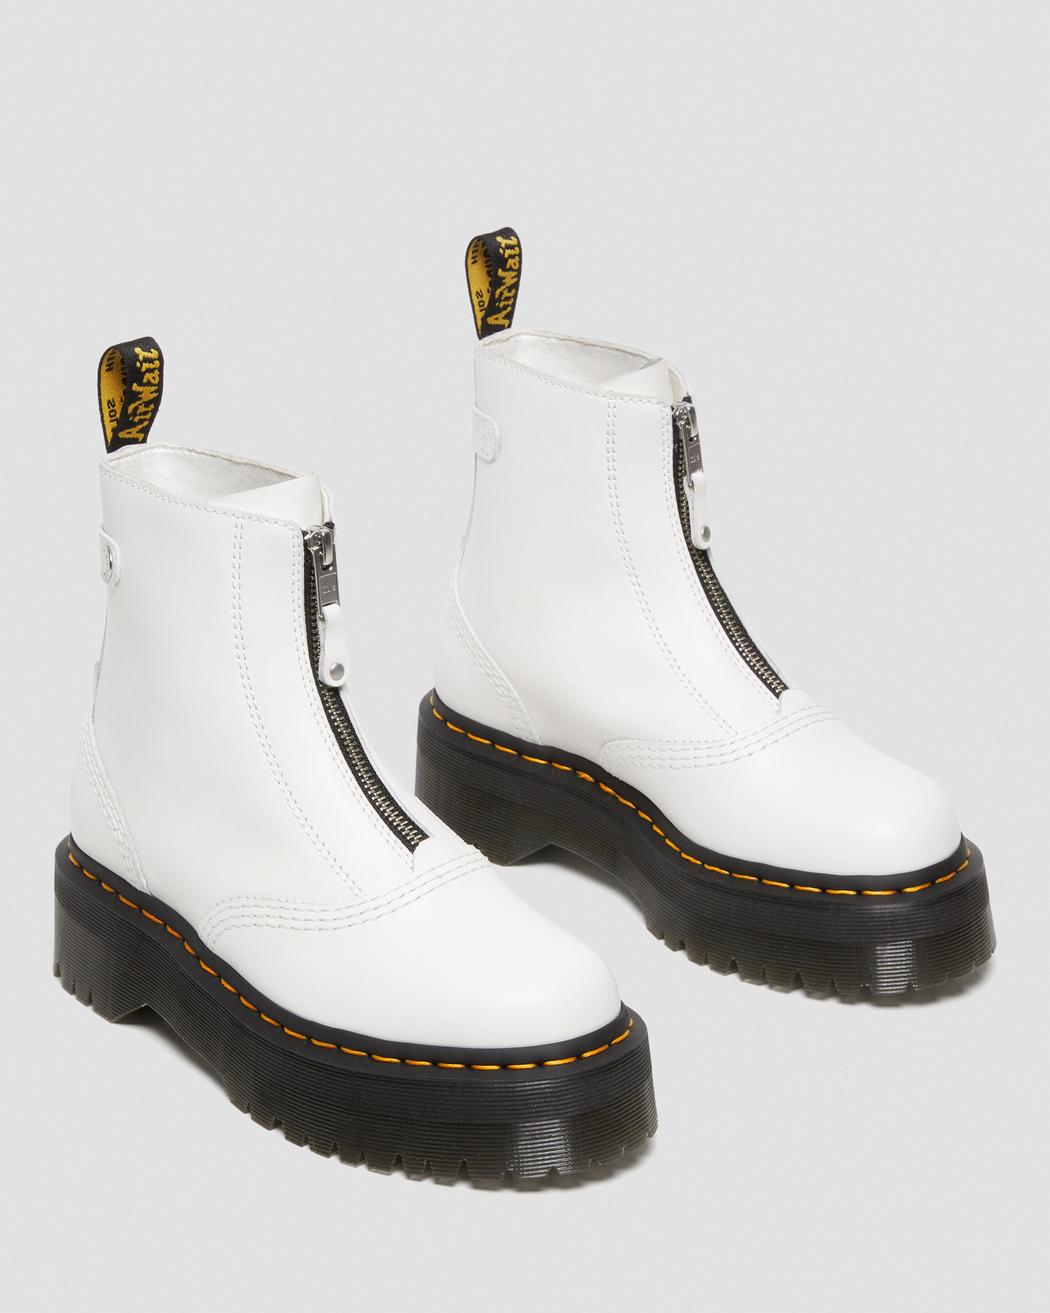 Jetta Zipped White Leather Platform Boots DM27656100 - 2a